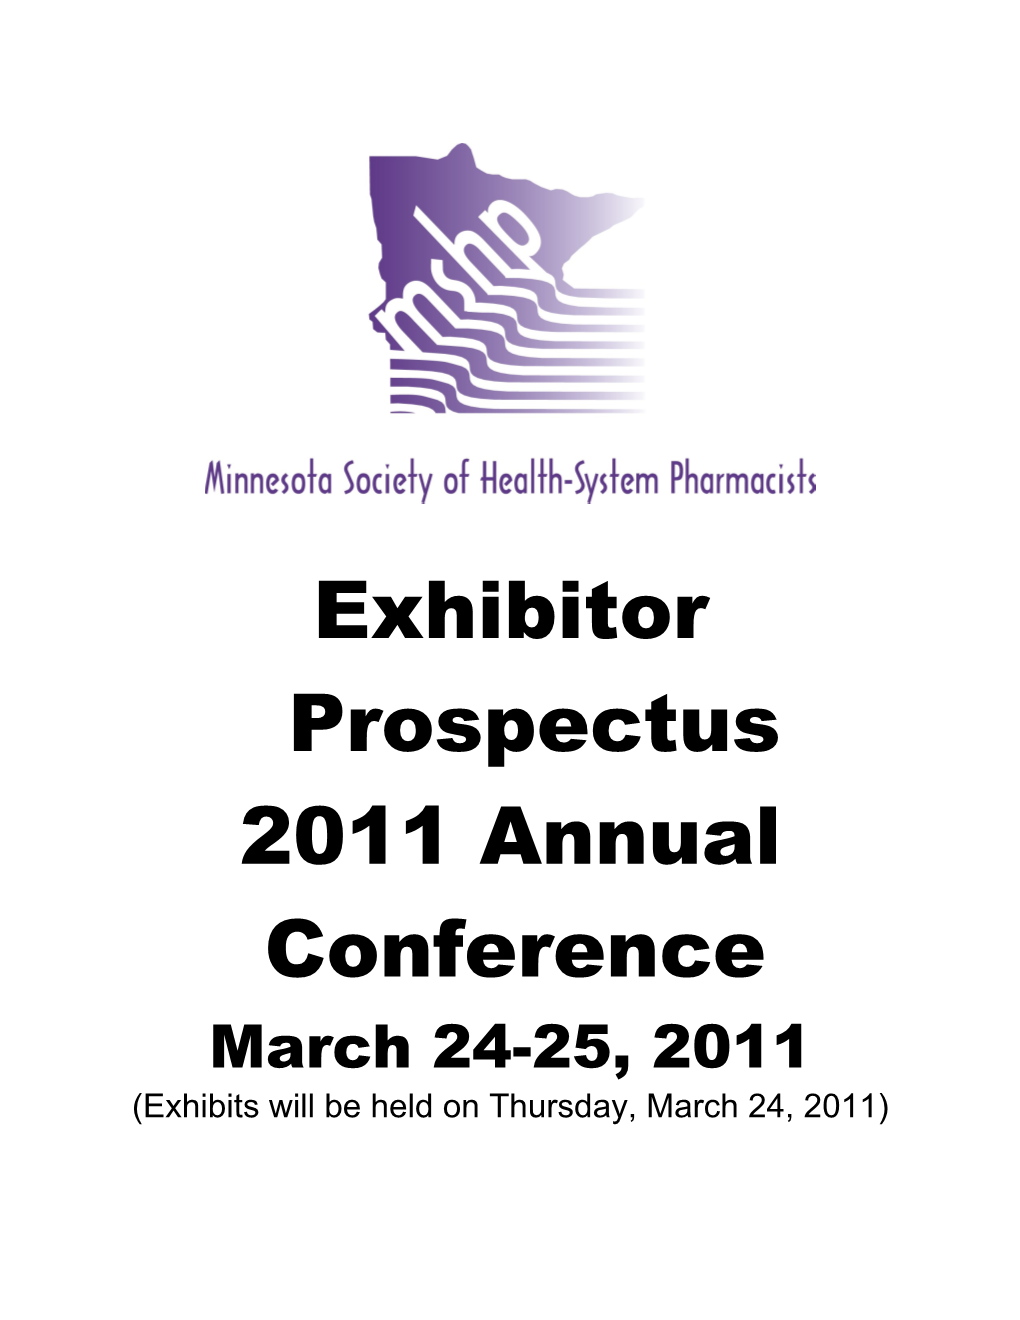 Minnesota Society of Health-System Pharmacists s2